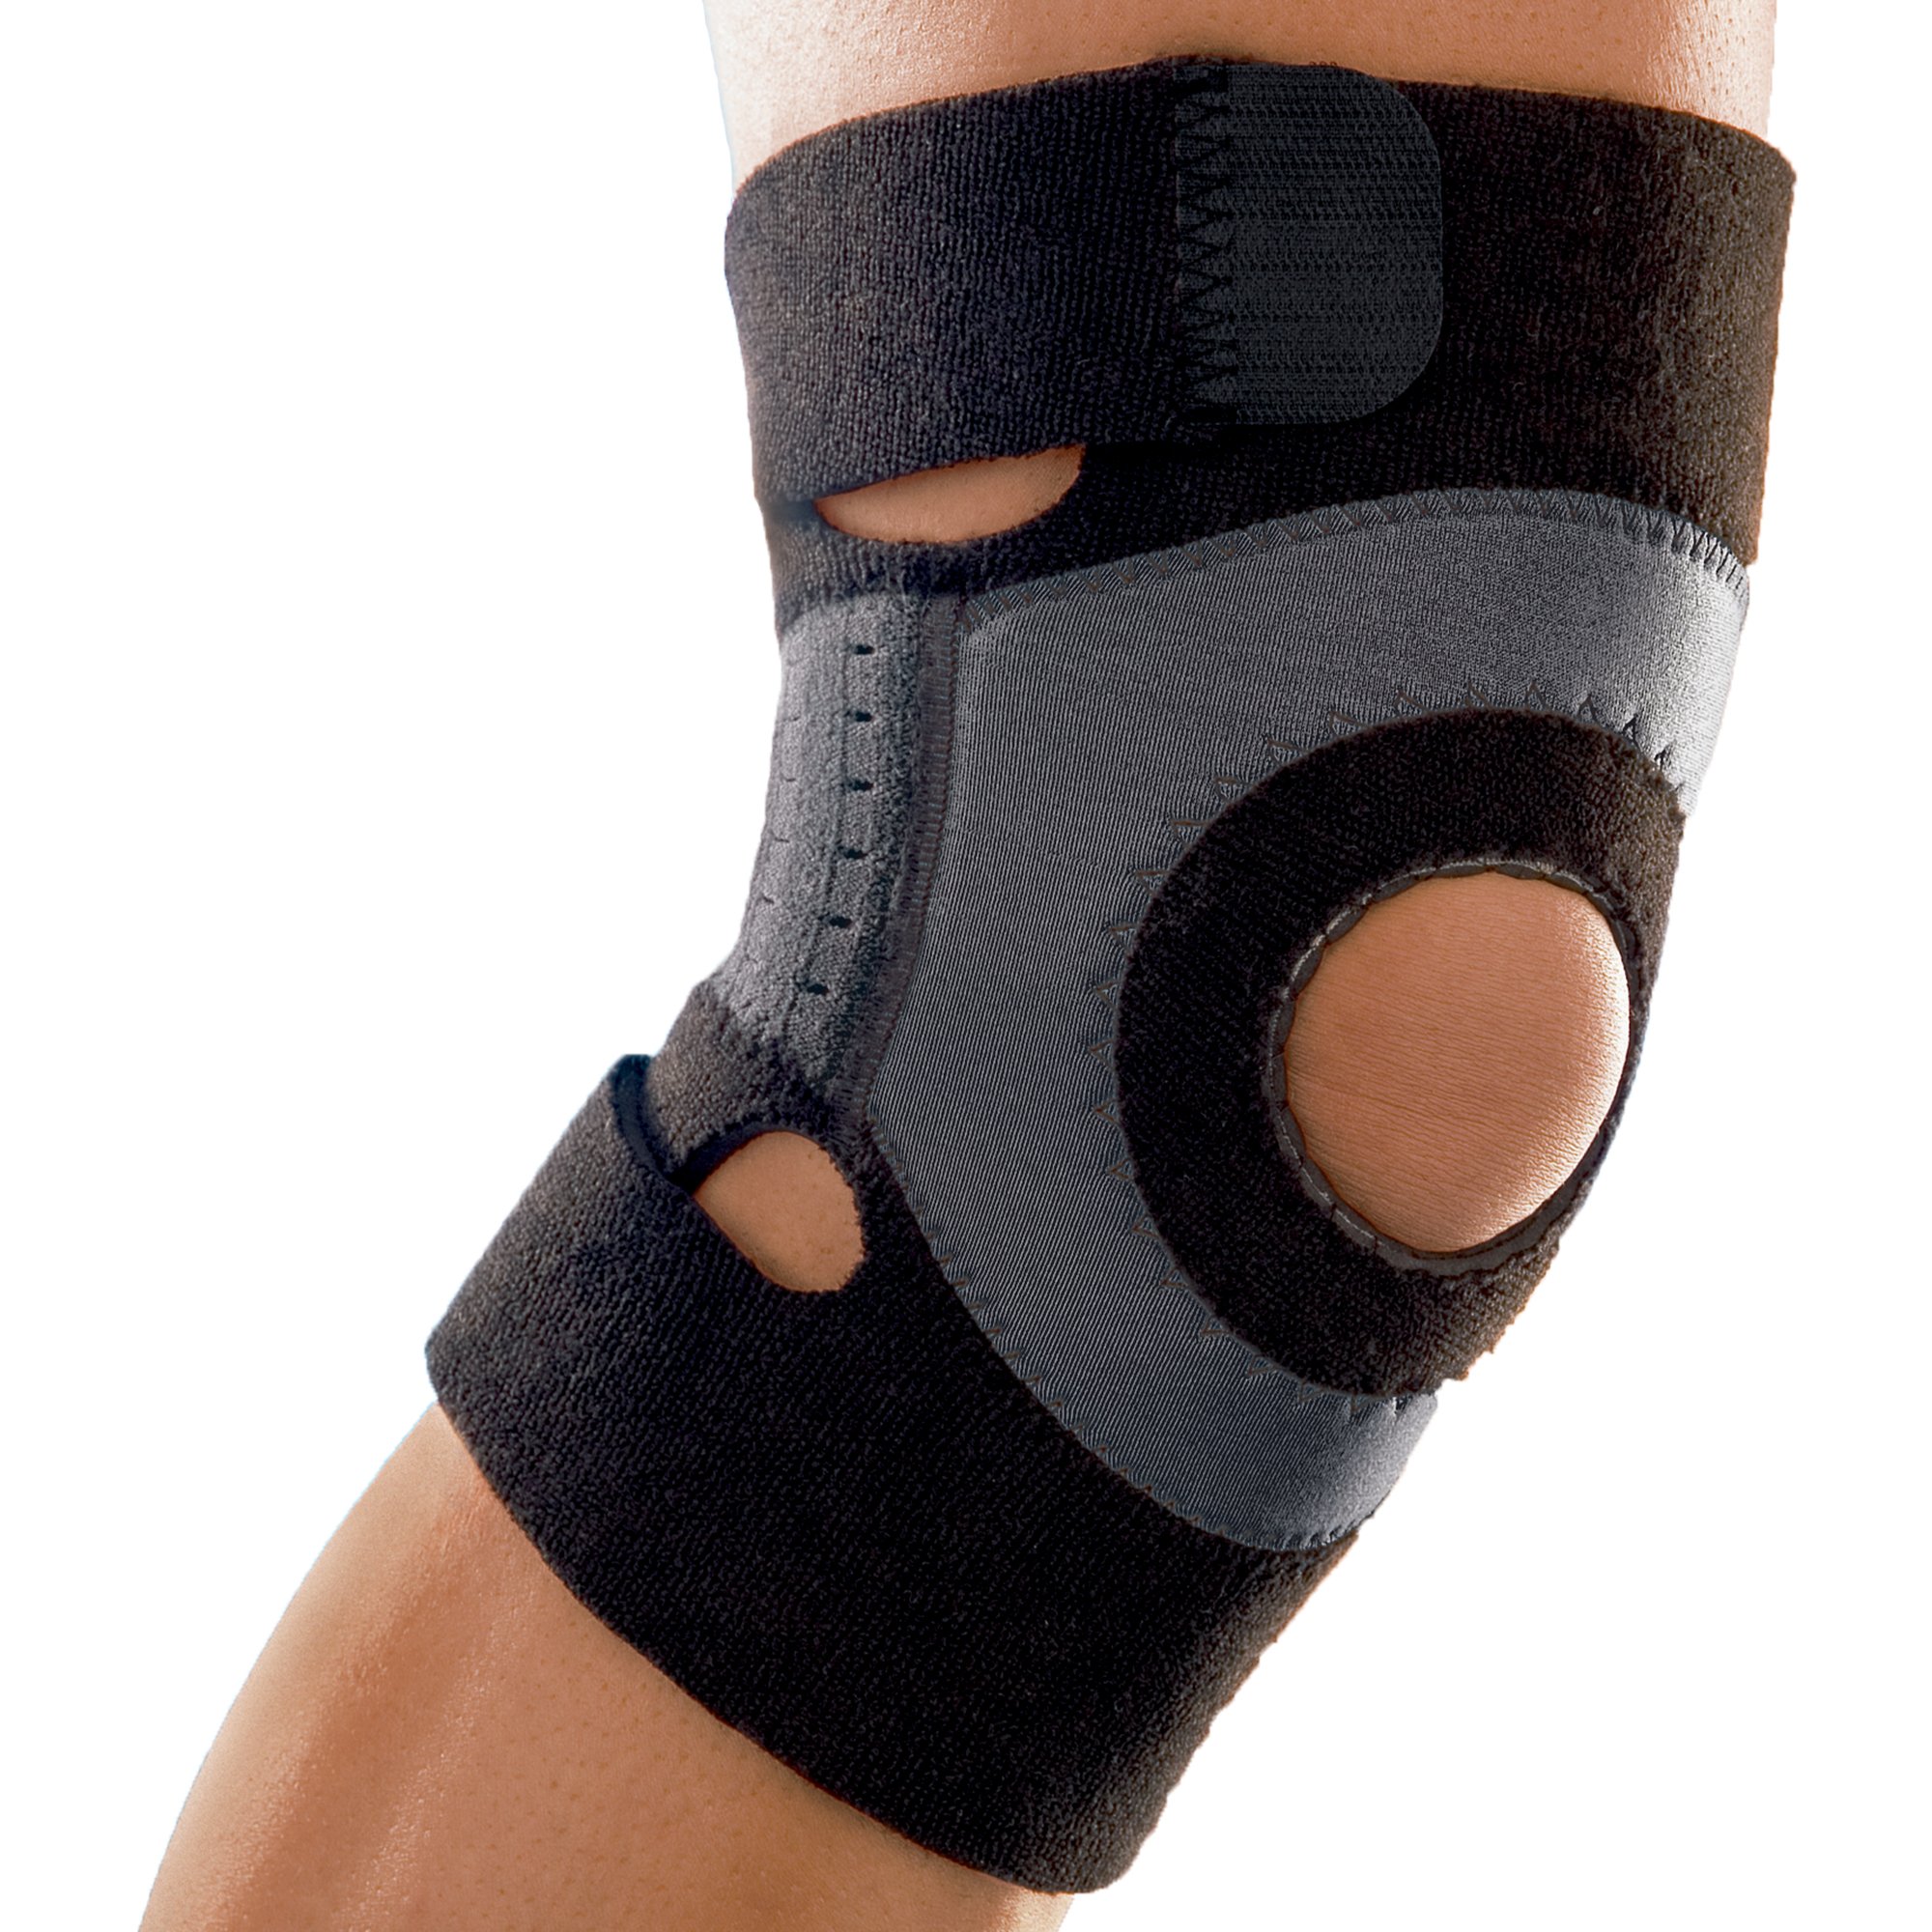 futuro sport adjustable knee support instructions